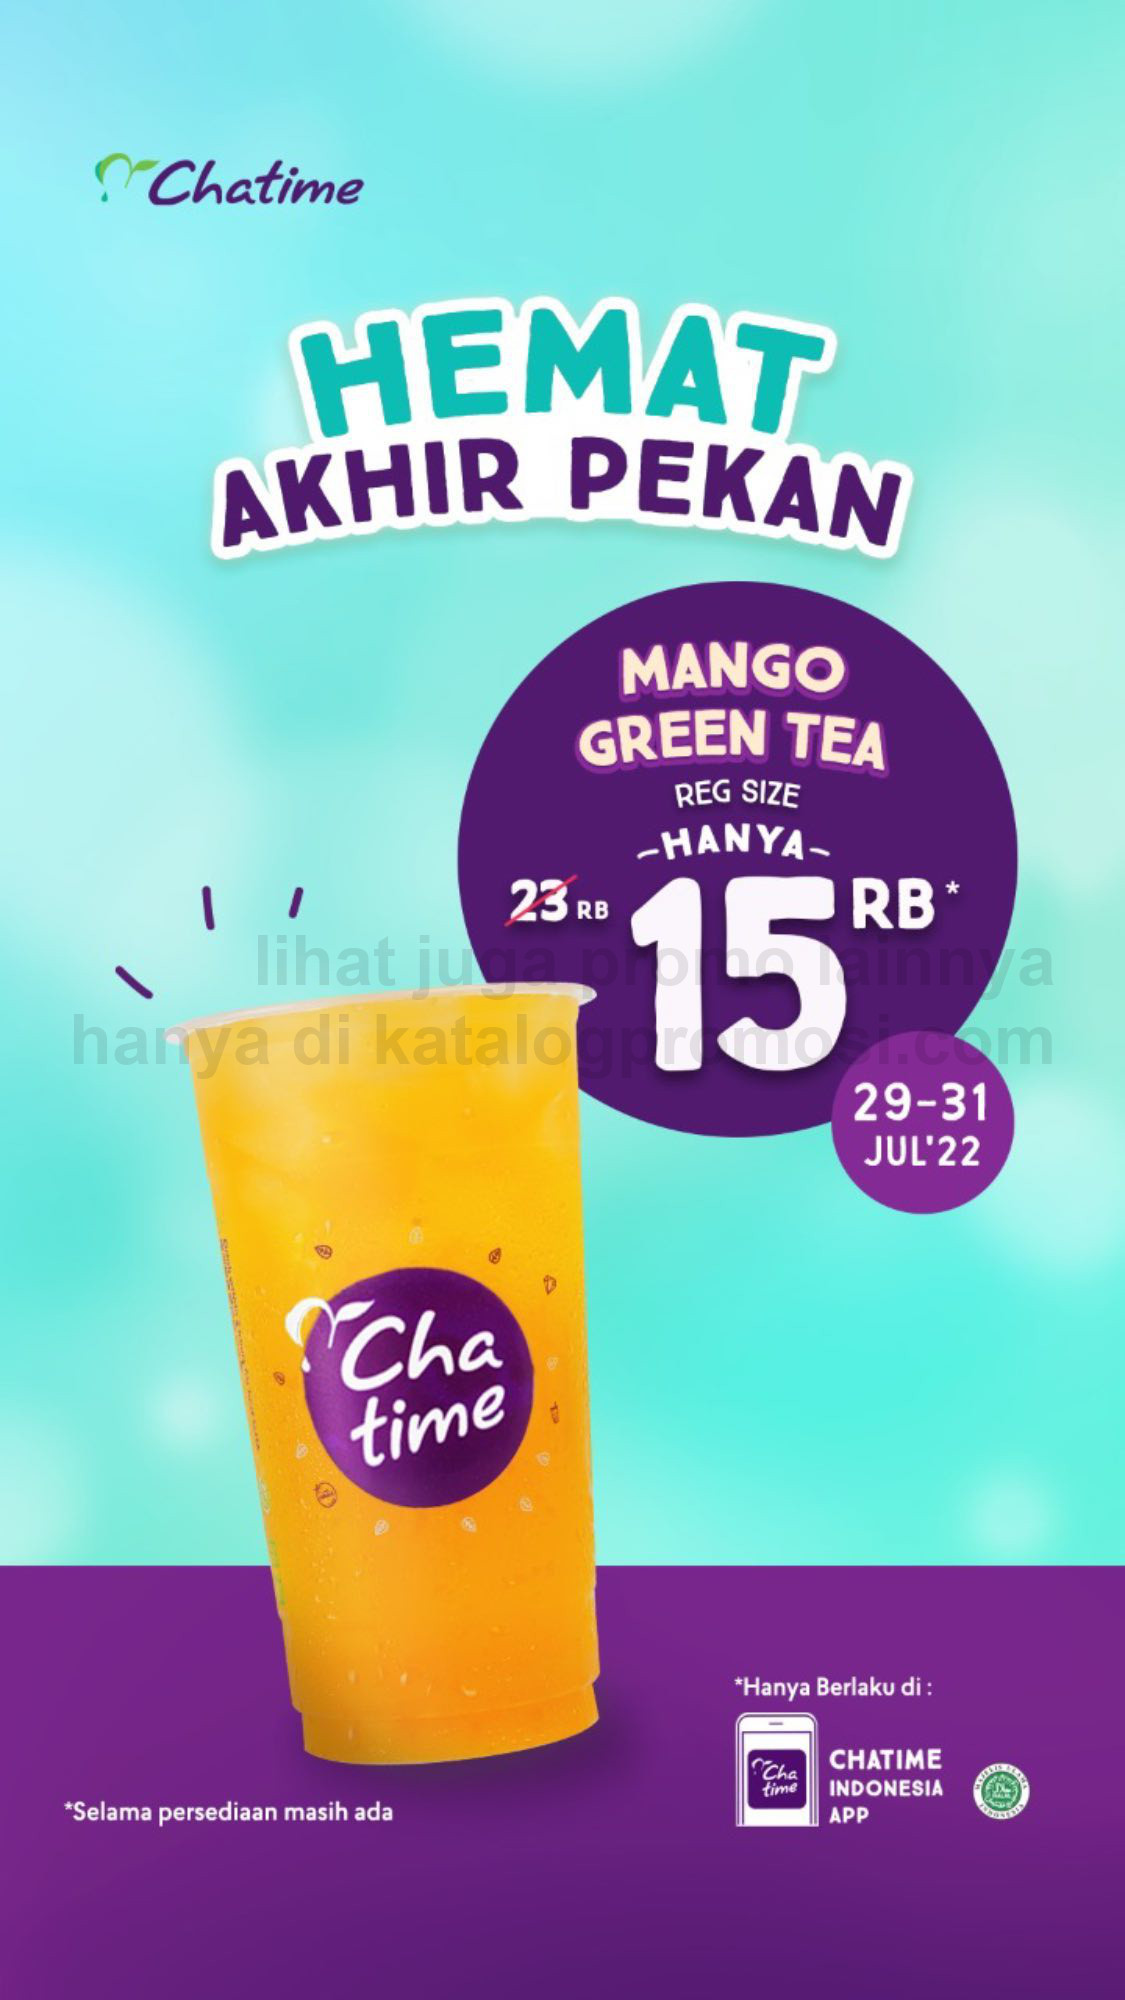 Promo CHATIME HEMAT AKHIR PEKAN - Mango Green Tea Reg. Size hanya Rp. 15.000